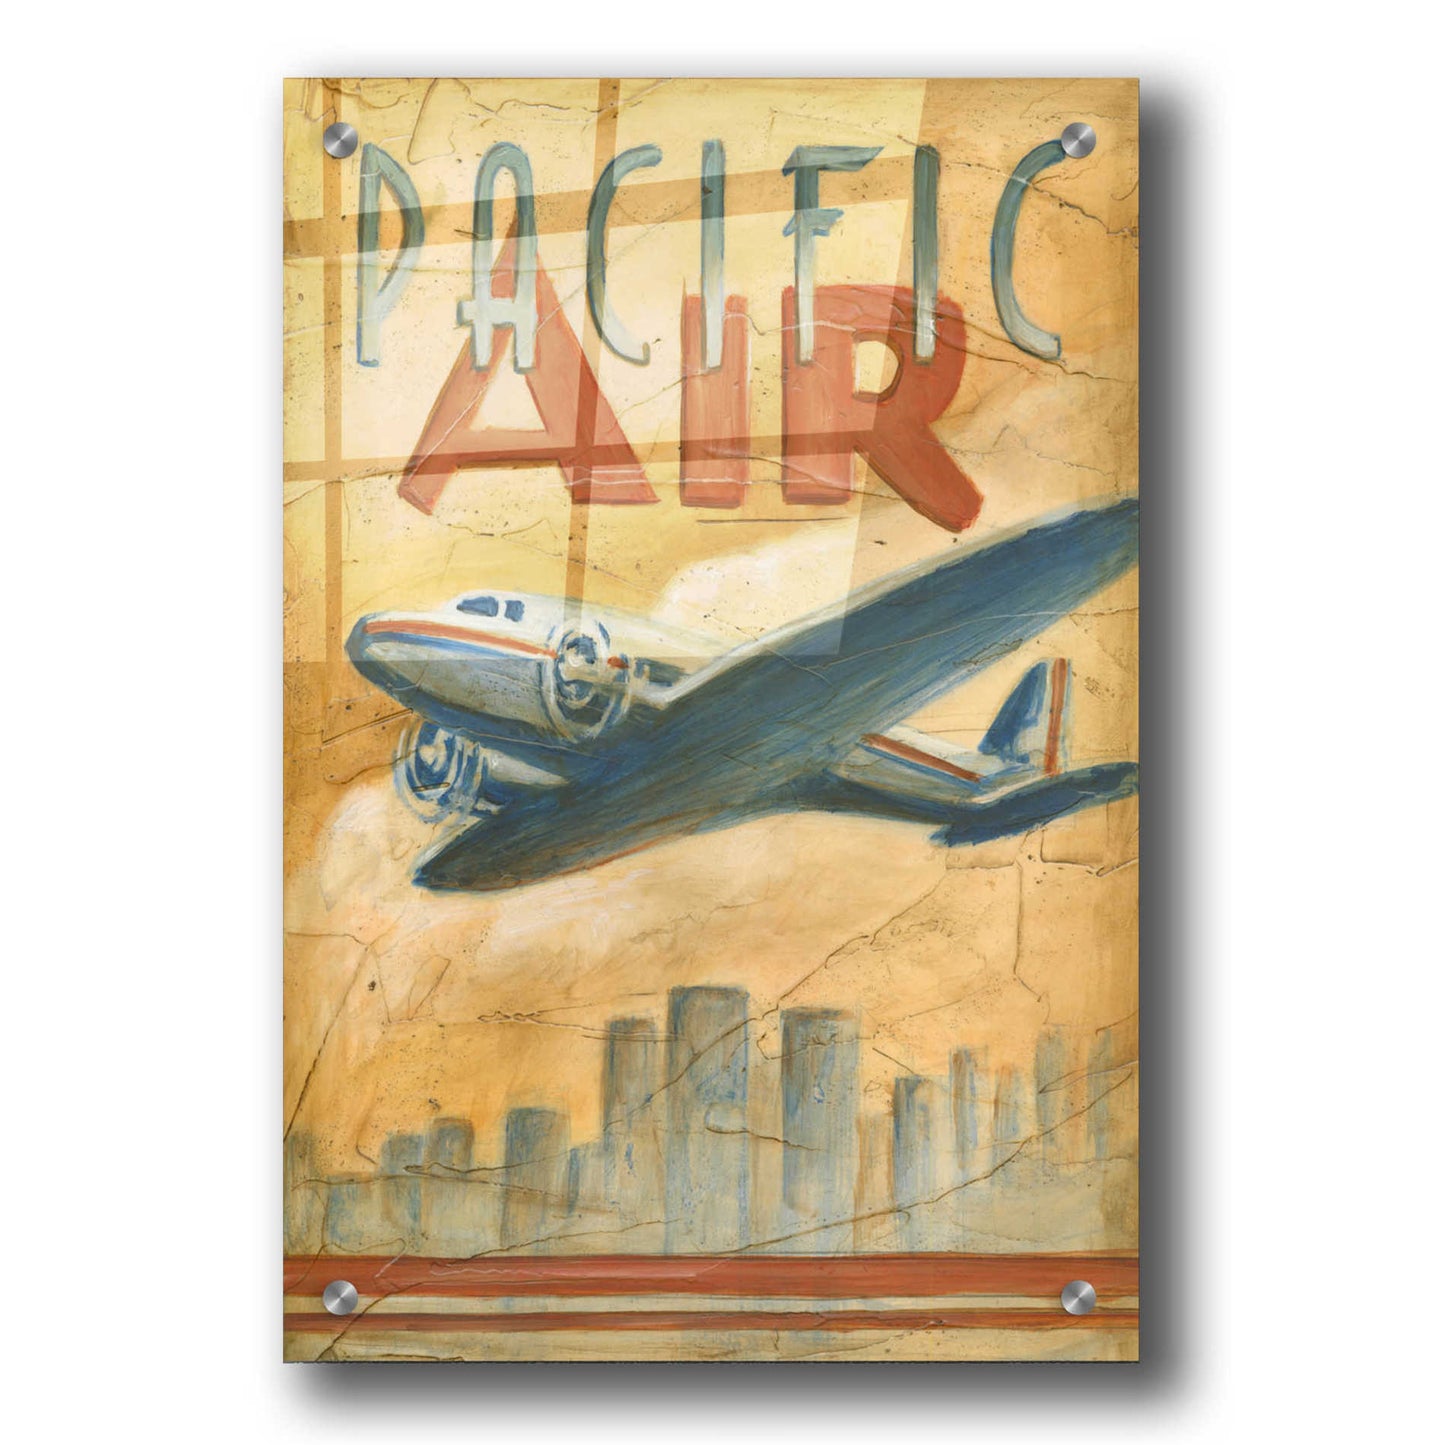 Epic Art 'Pacific Air' by Ethan Harper, Acrylic Glass Wall Art,24x36